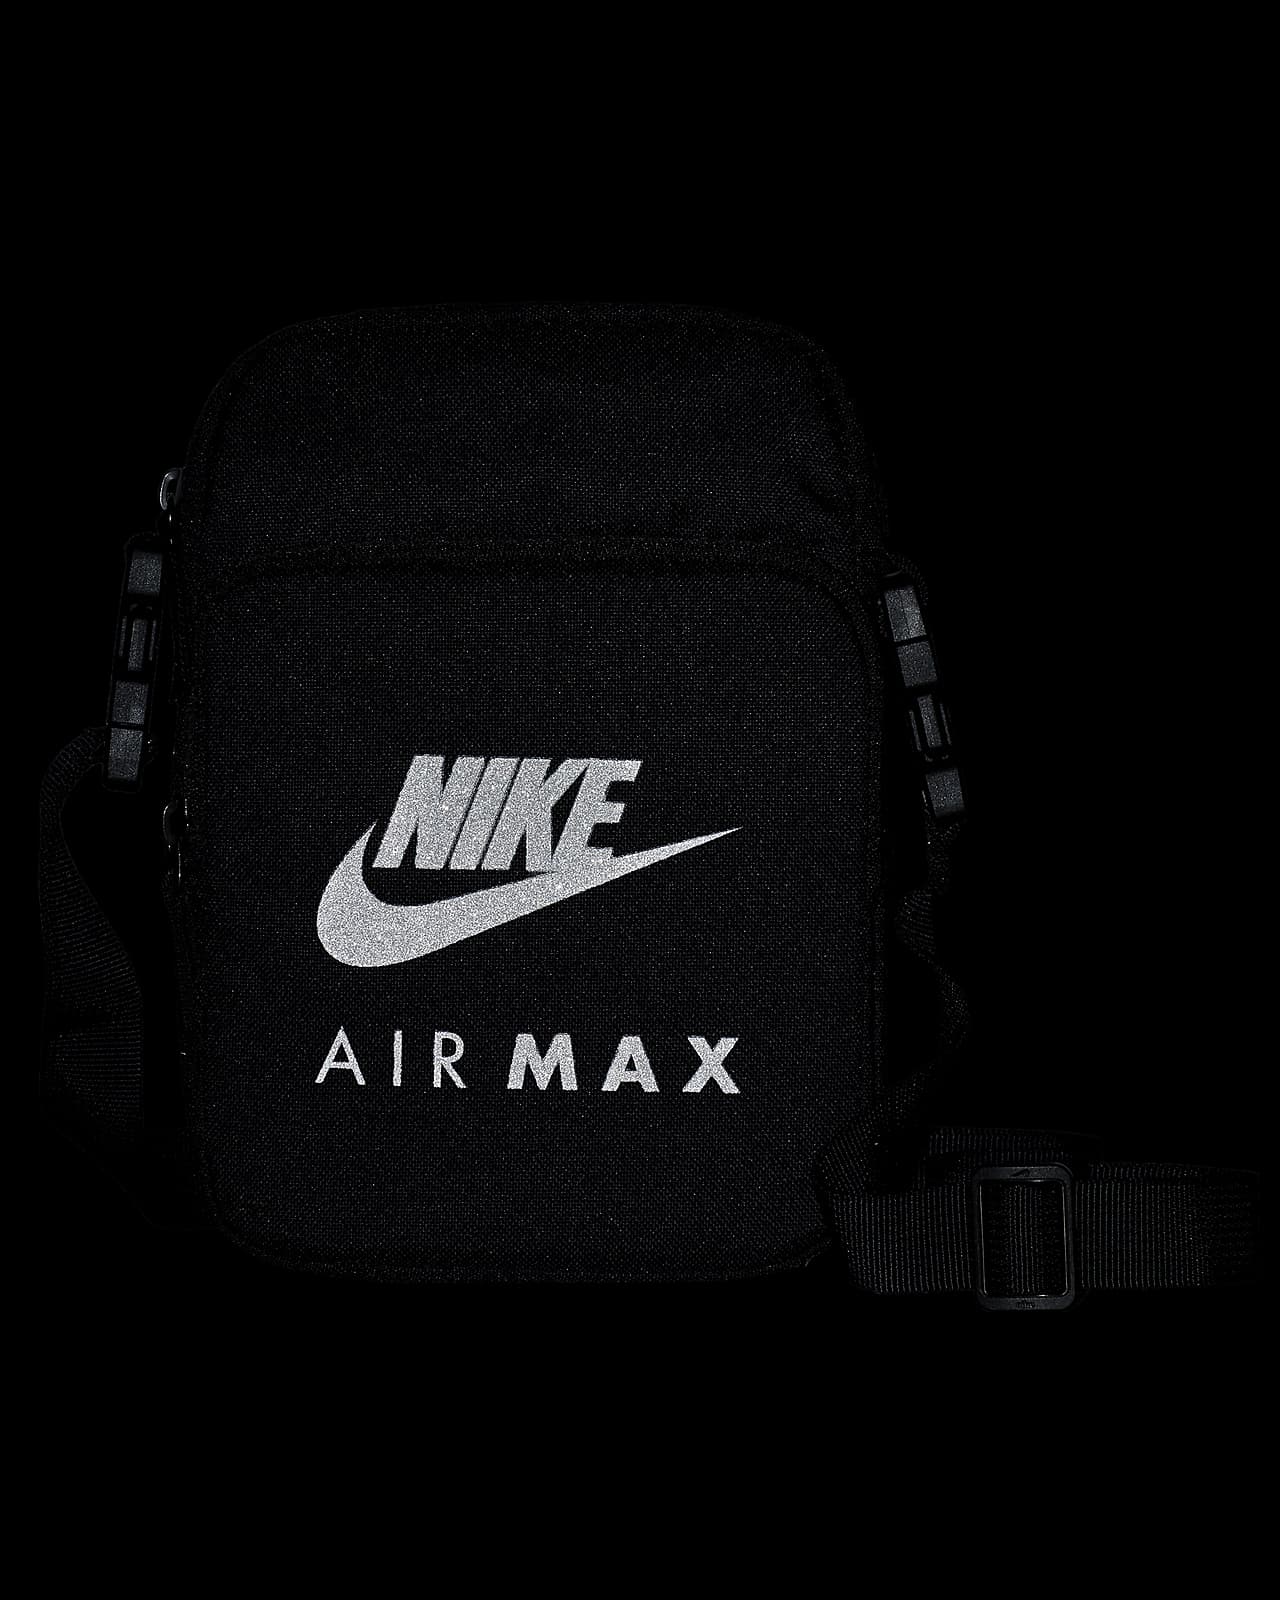 nike air max small bag